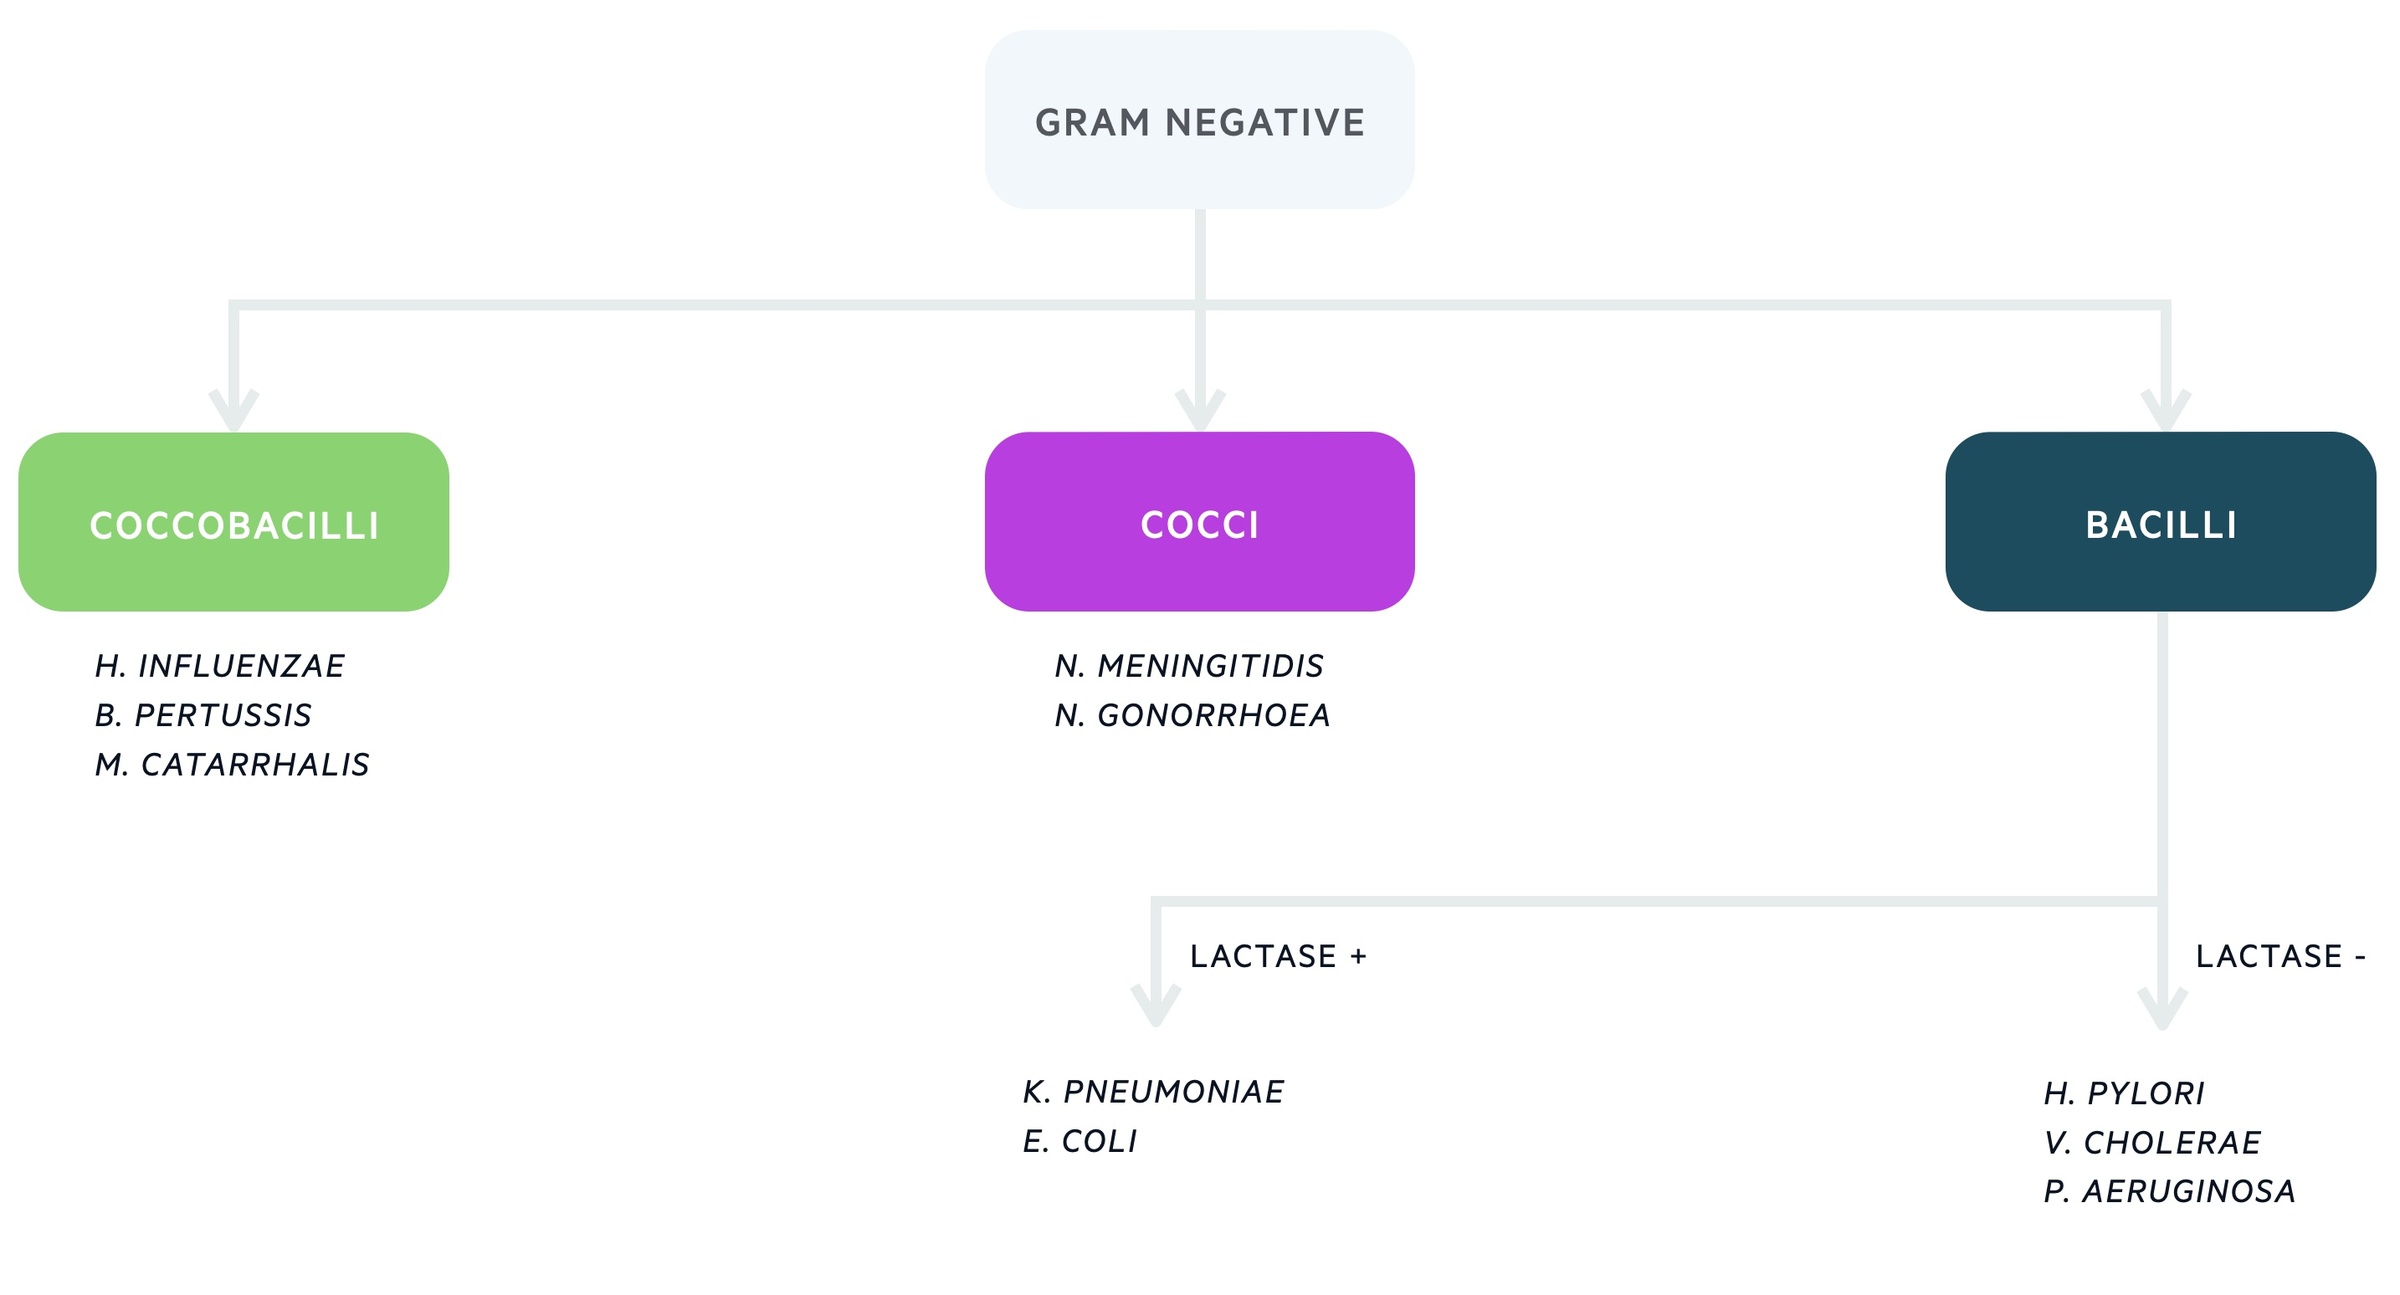 Gram-negative bacteria